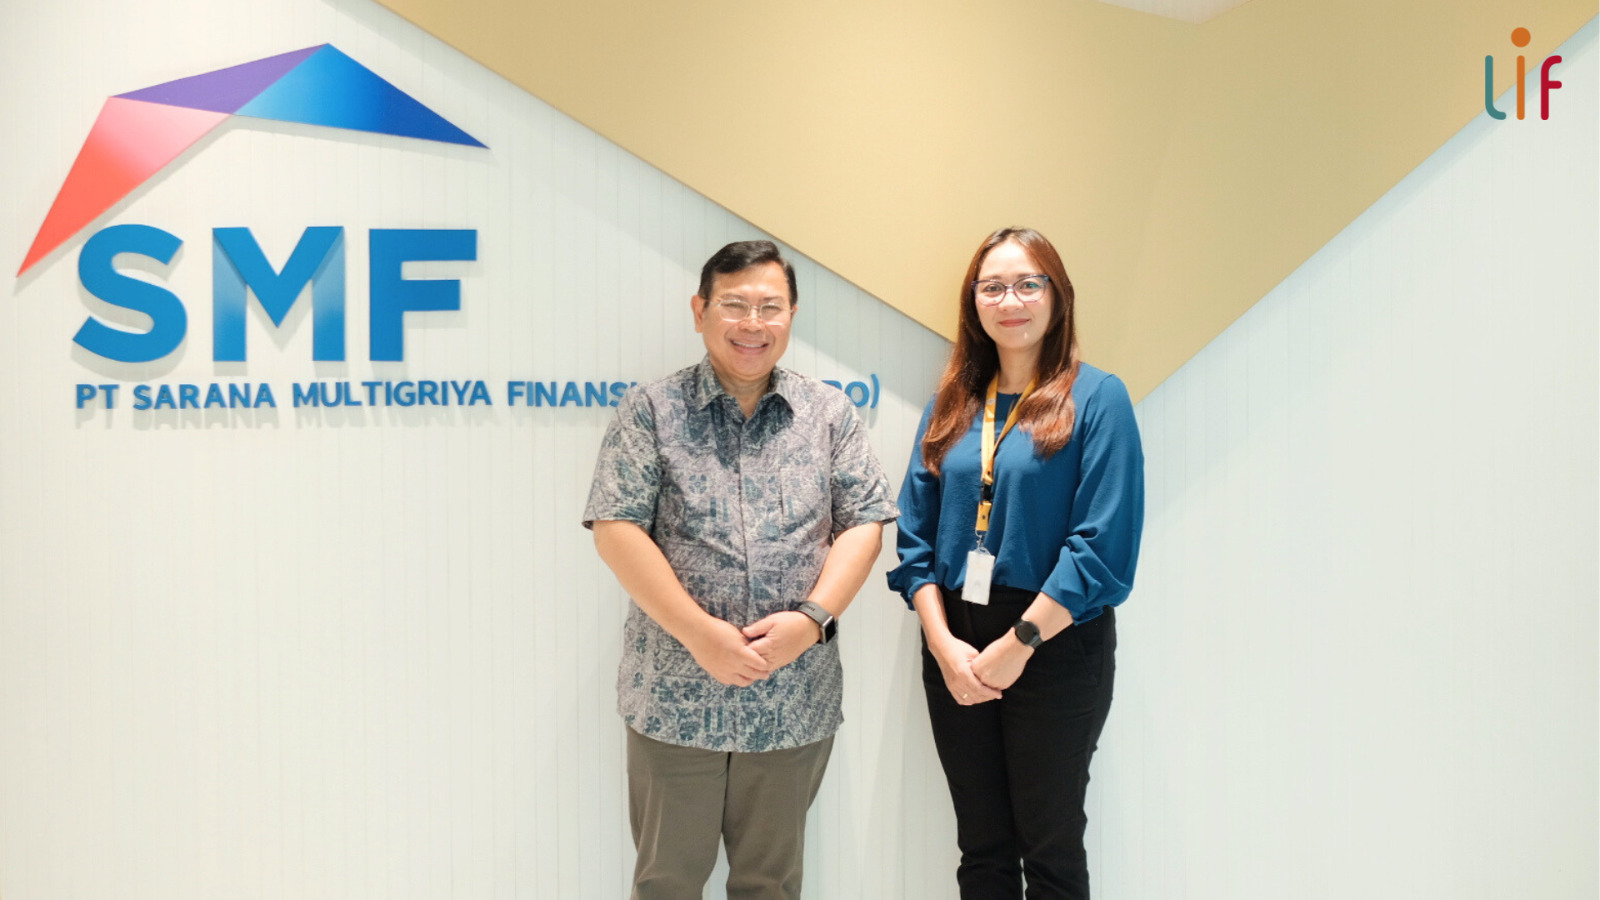 Kolaborasi PT Sarana Multigriya Finansial (Persero) dengan LIF Indonesia Dalam Program Kesejahteraan Karyawan 